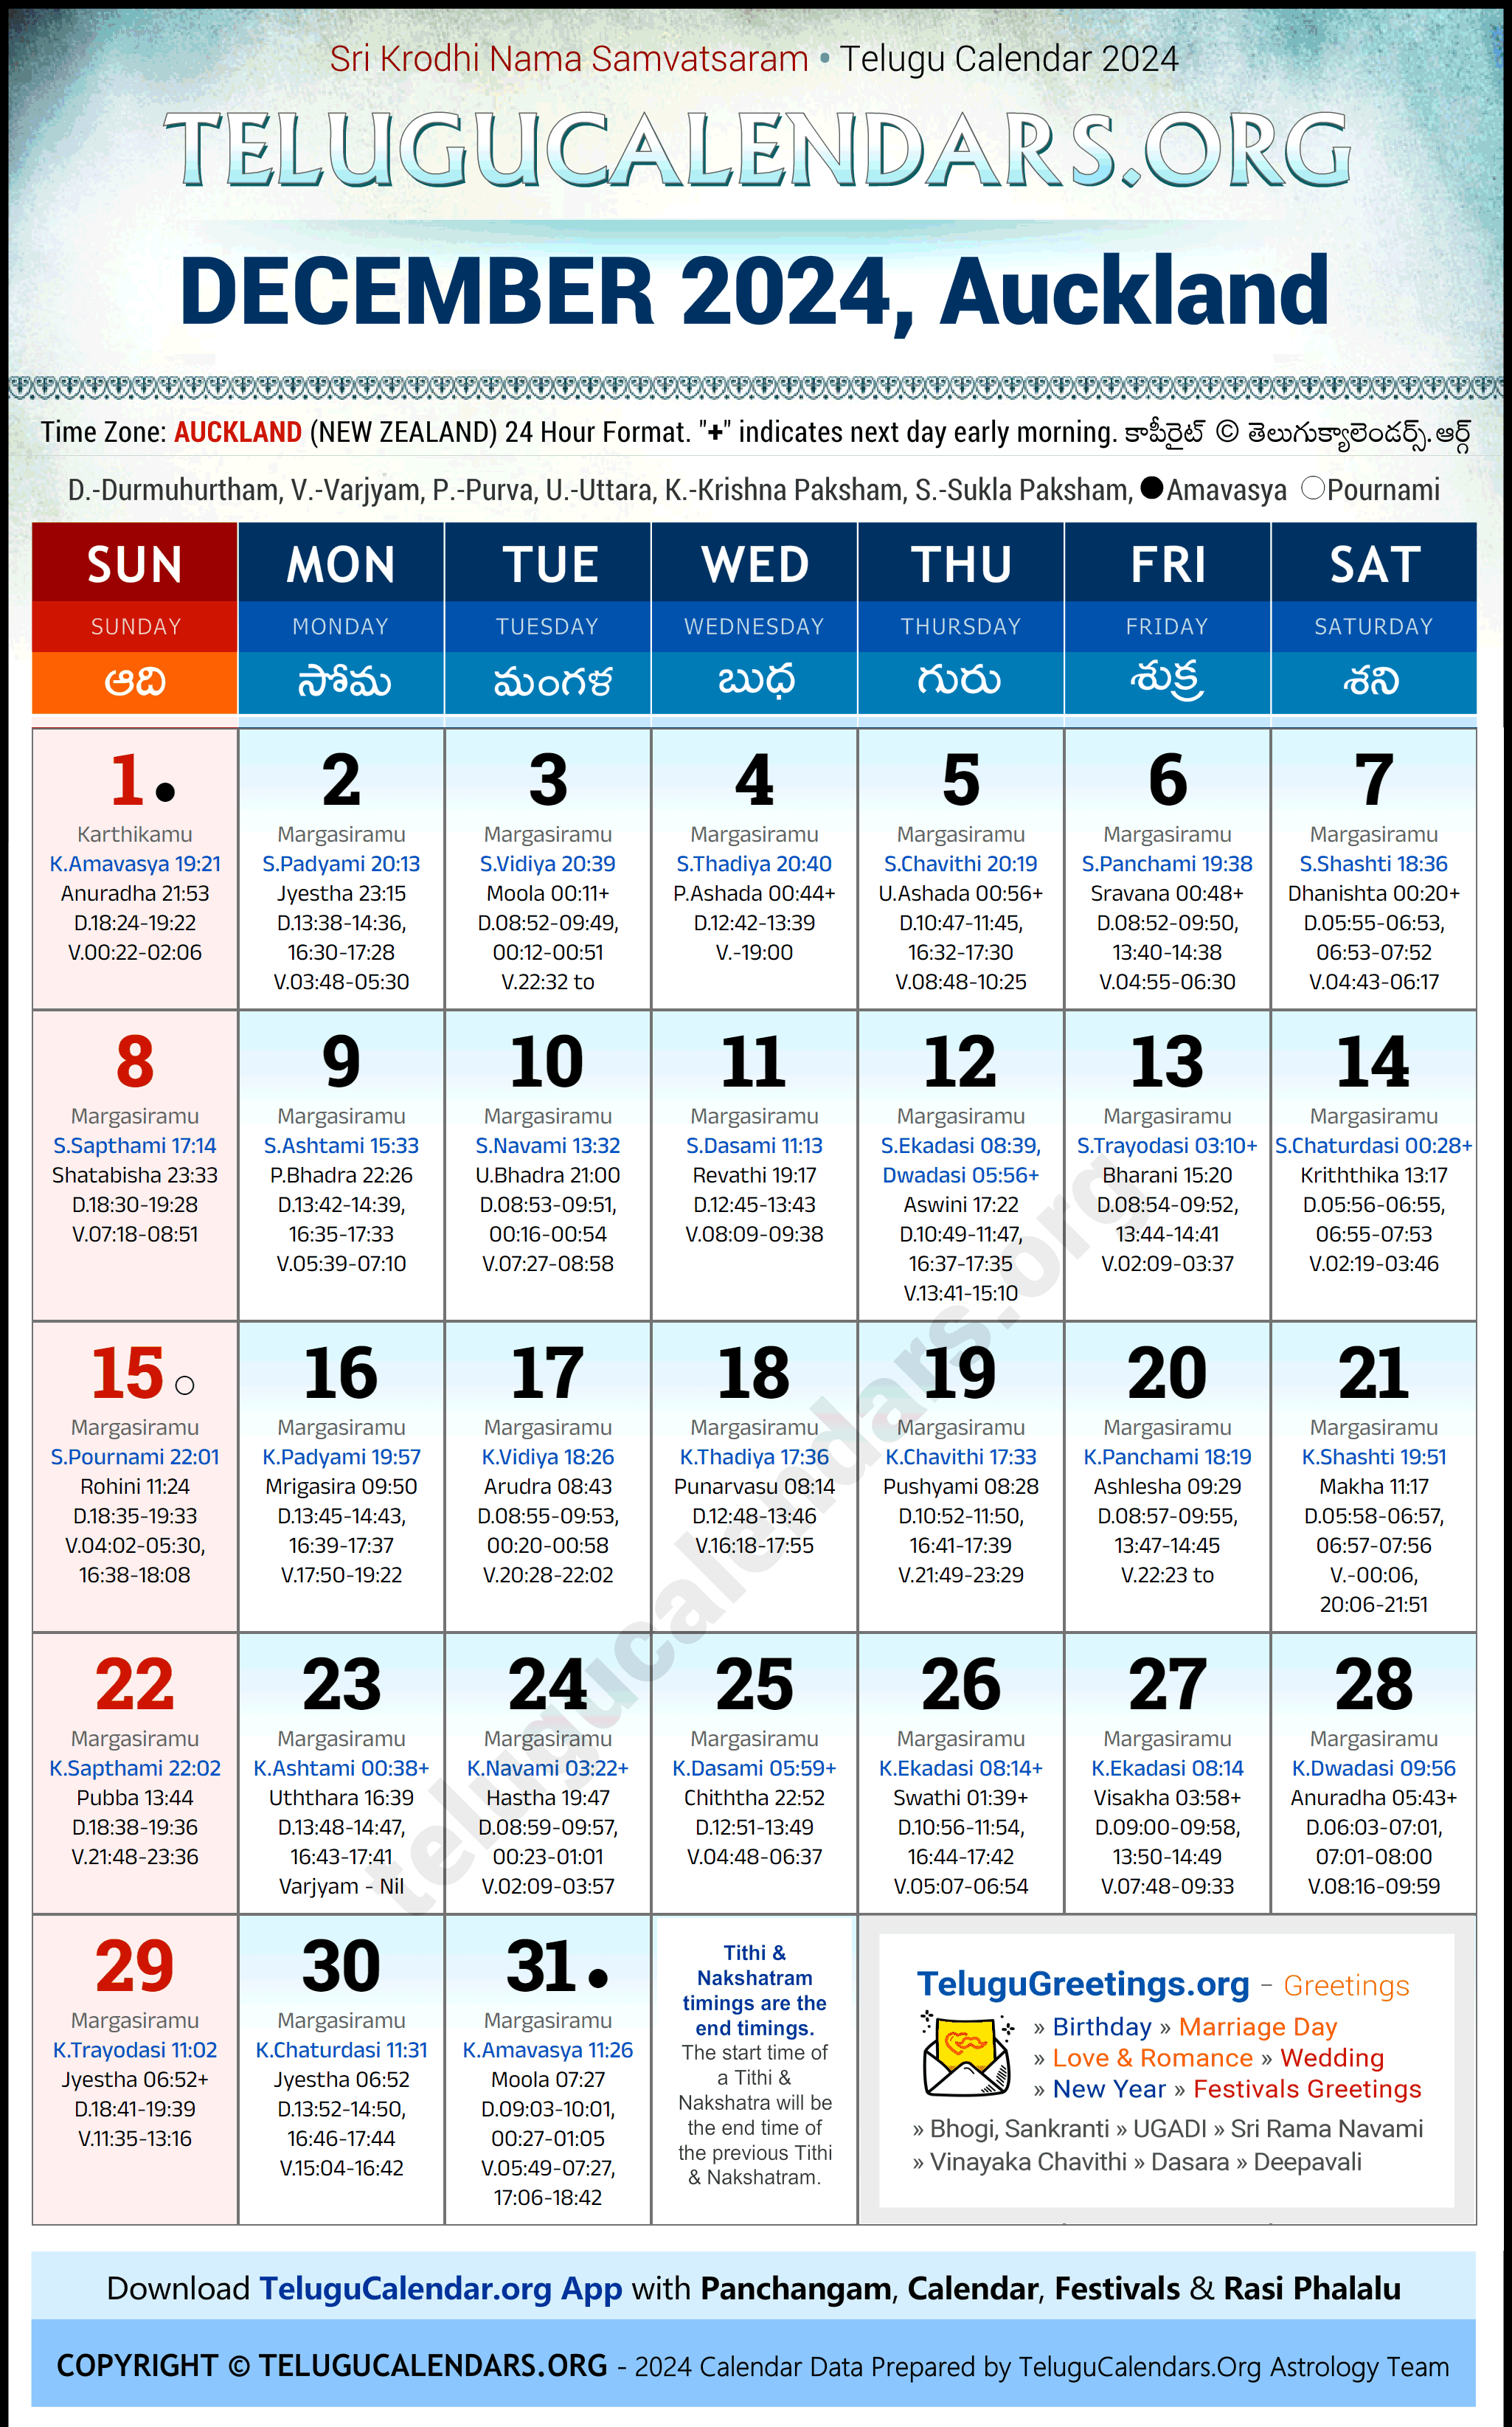 Telugu Calendar 2024 December Festivals for Auckland